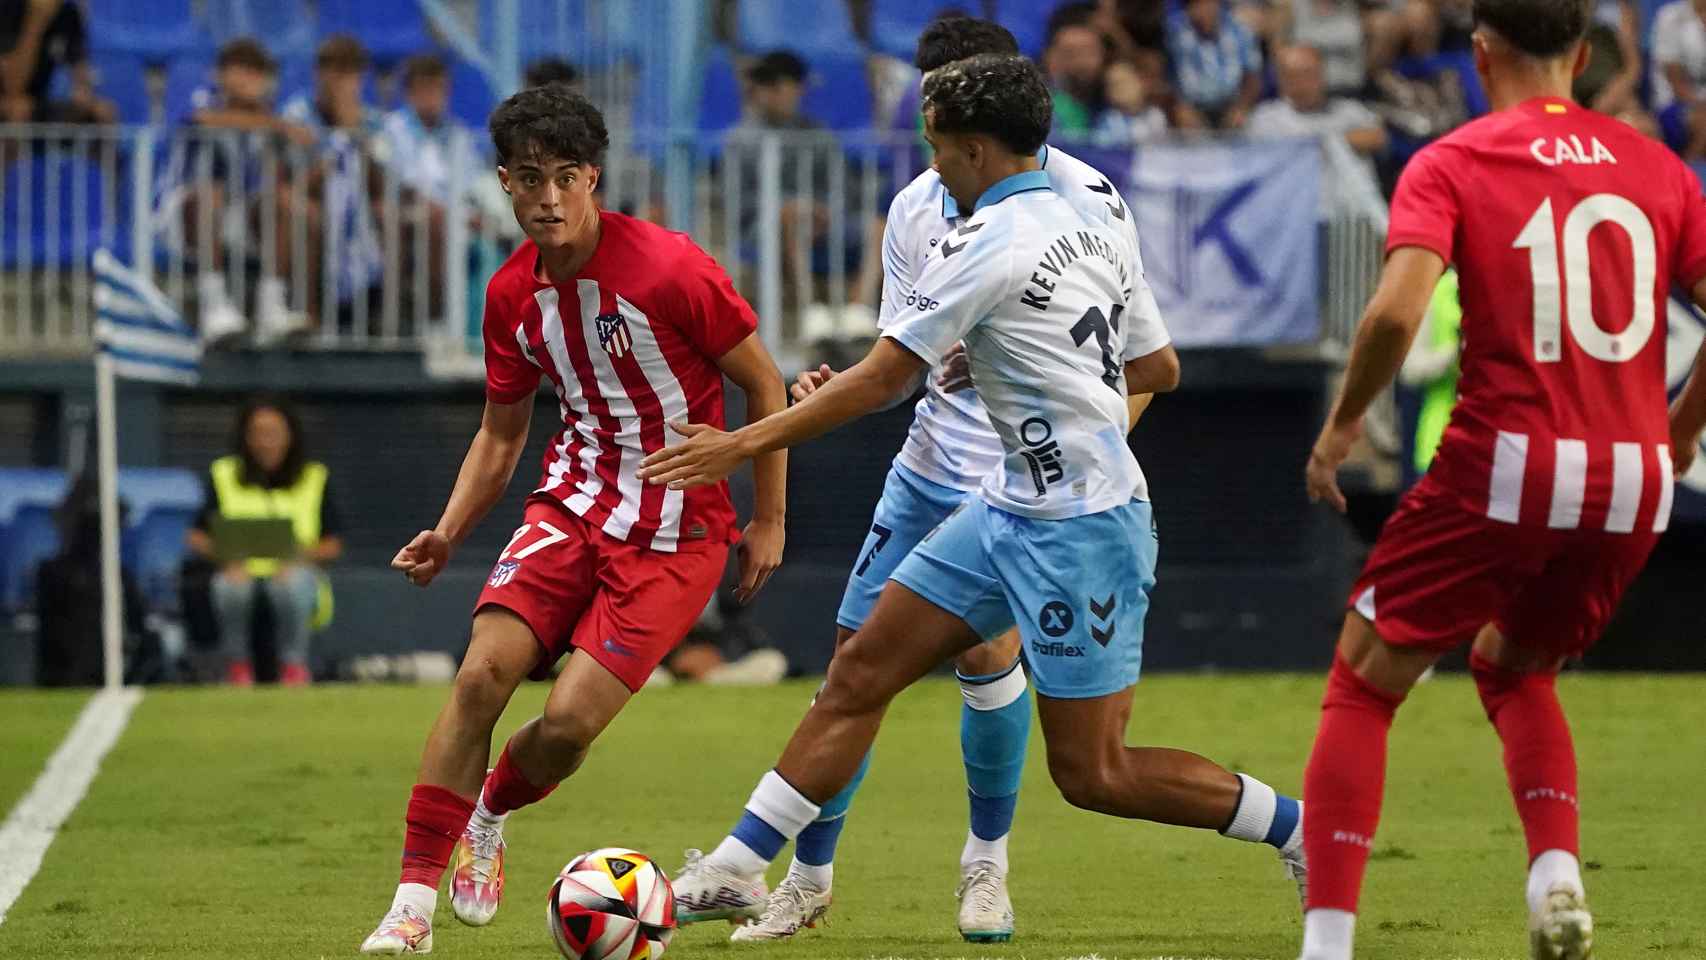 Málaga vs atlético madrid b